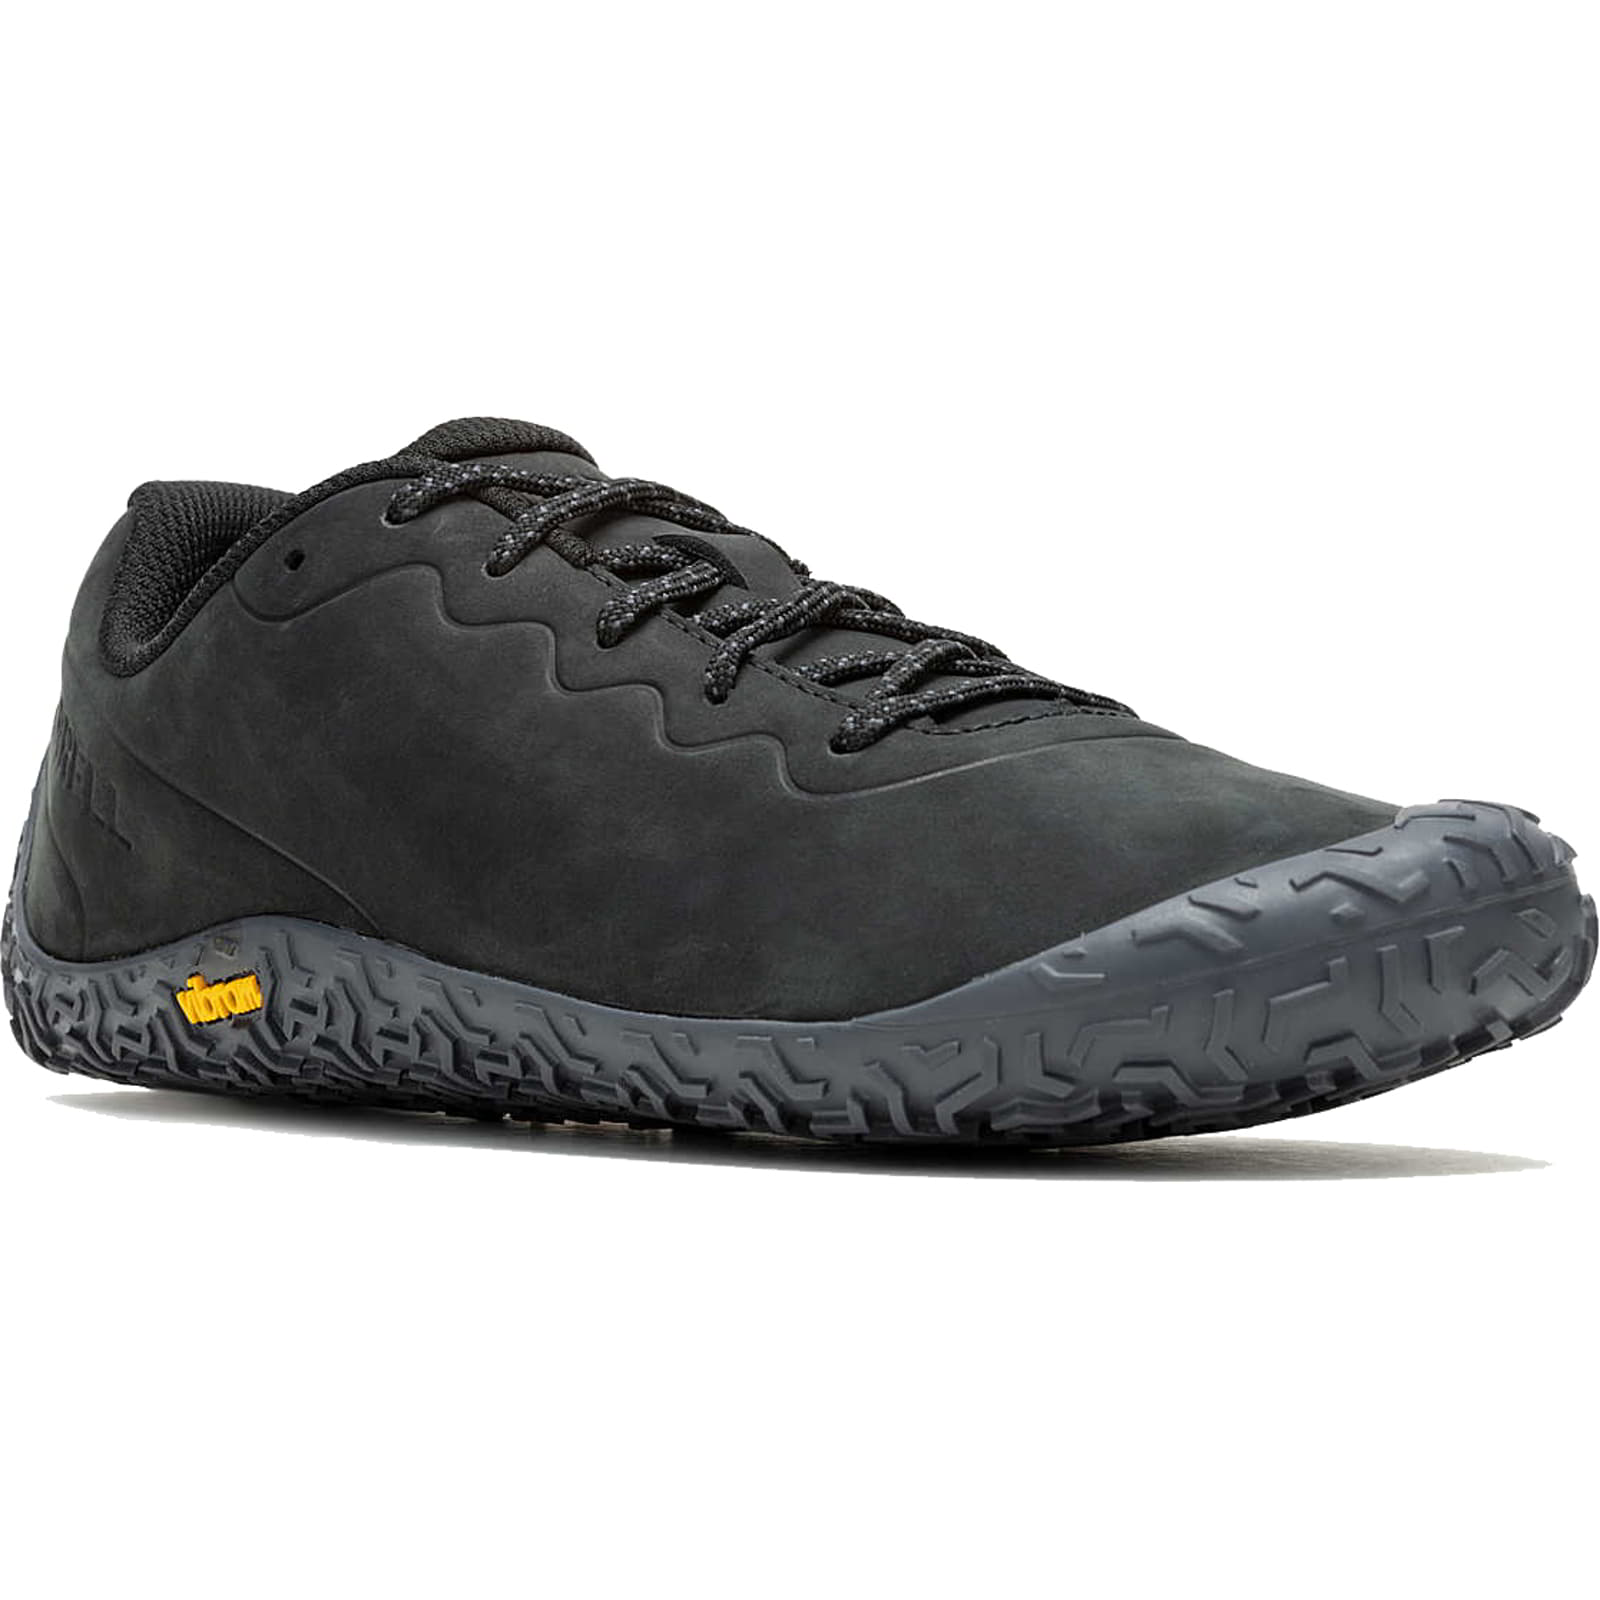 Merrell Men's Vapor Glove 6 Leather Barefoot Running Shoes Trainers - UK 10